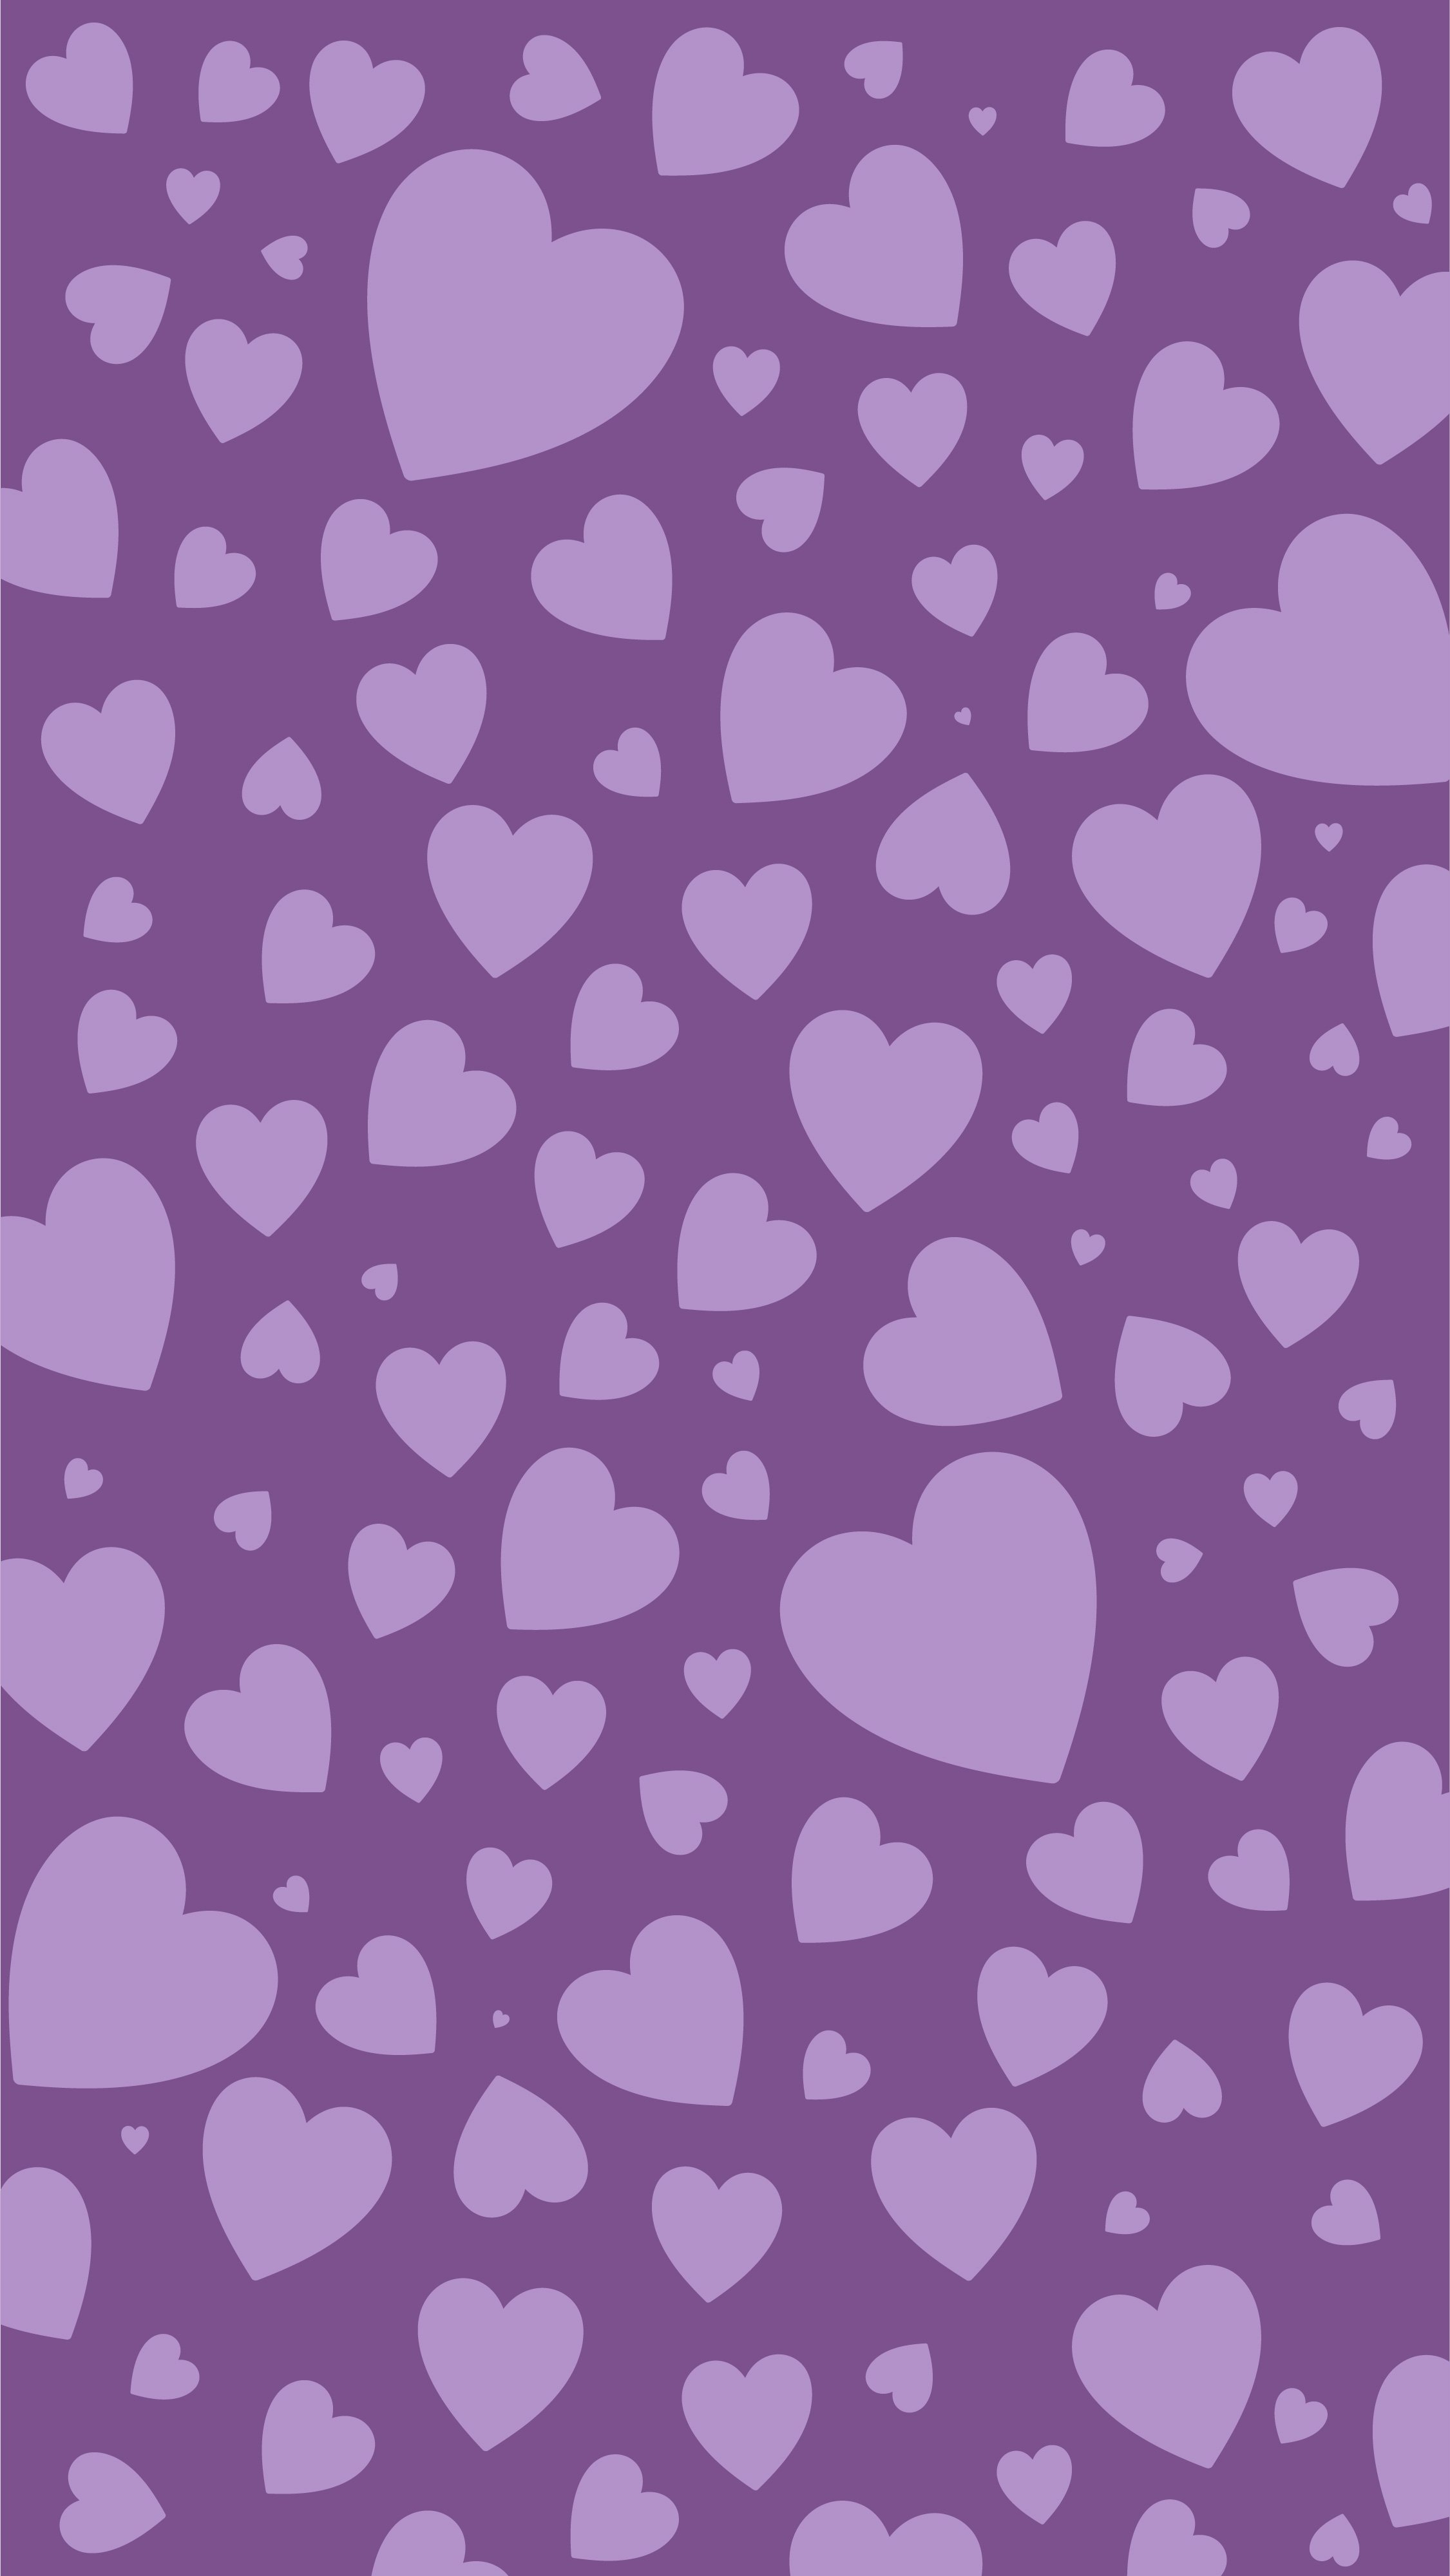 Free Black And Purple Heart Background - EPS, Illustrator, JPG, SVG ...